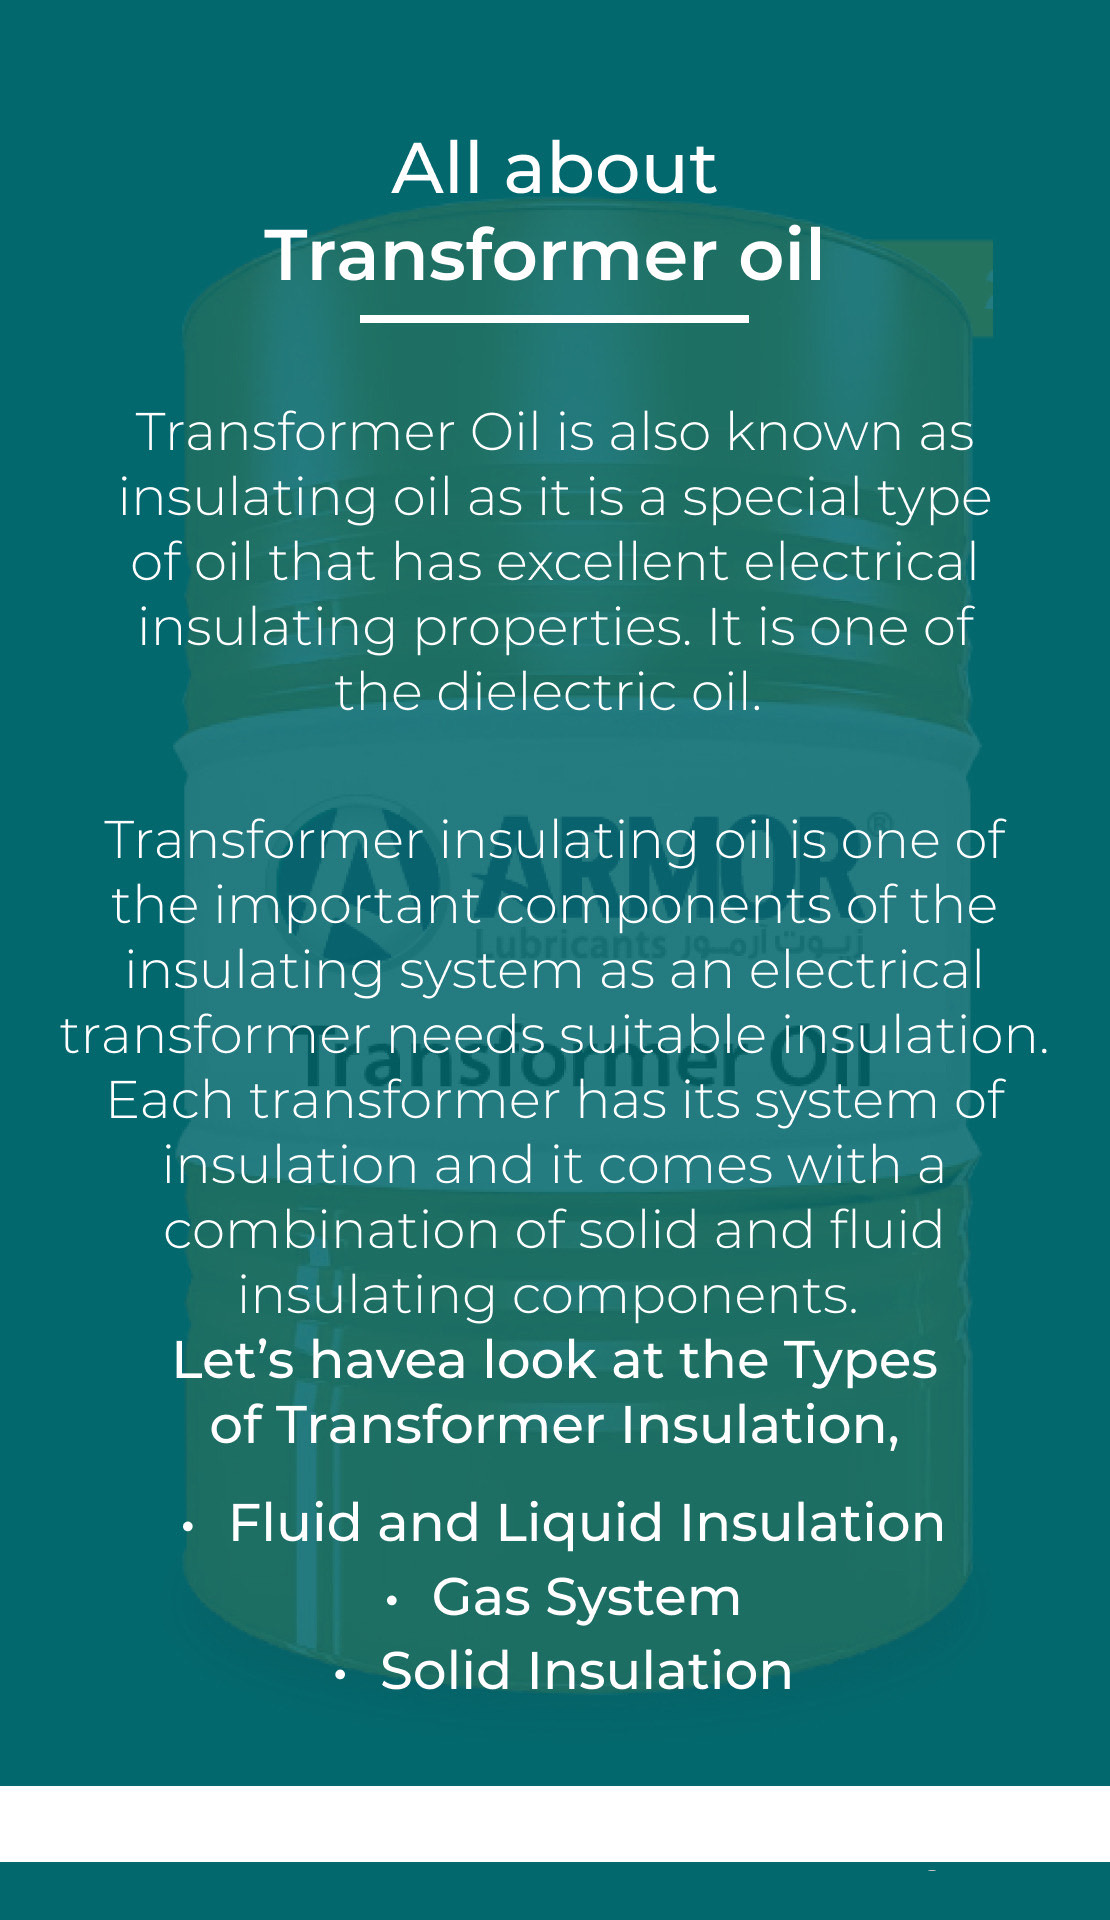 Transformer insulating oil concept illustration on armorlubricants.com blog